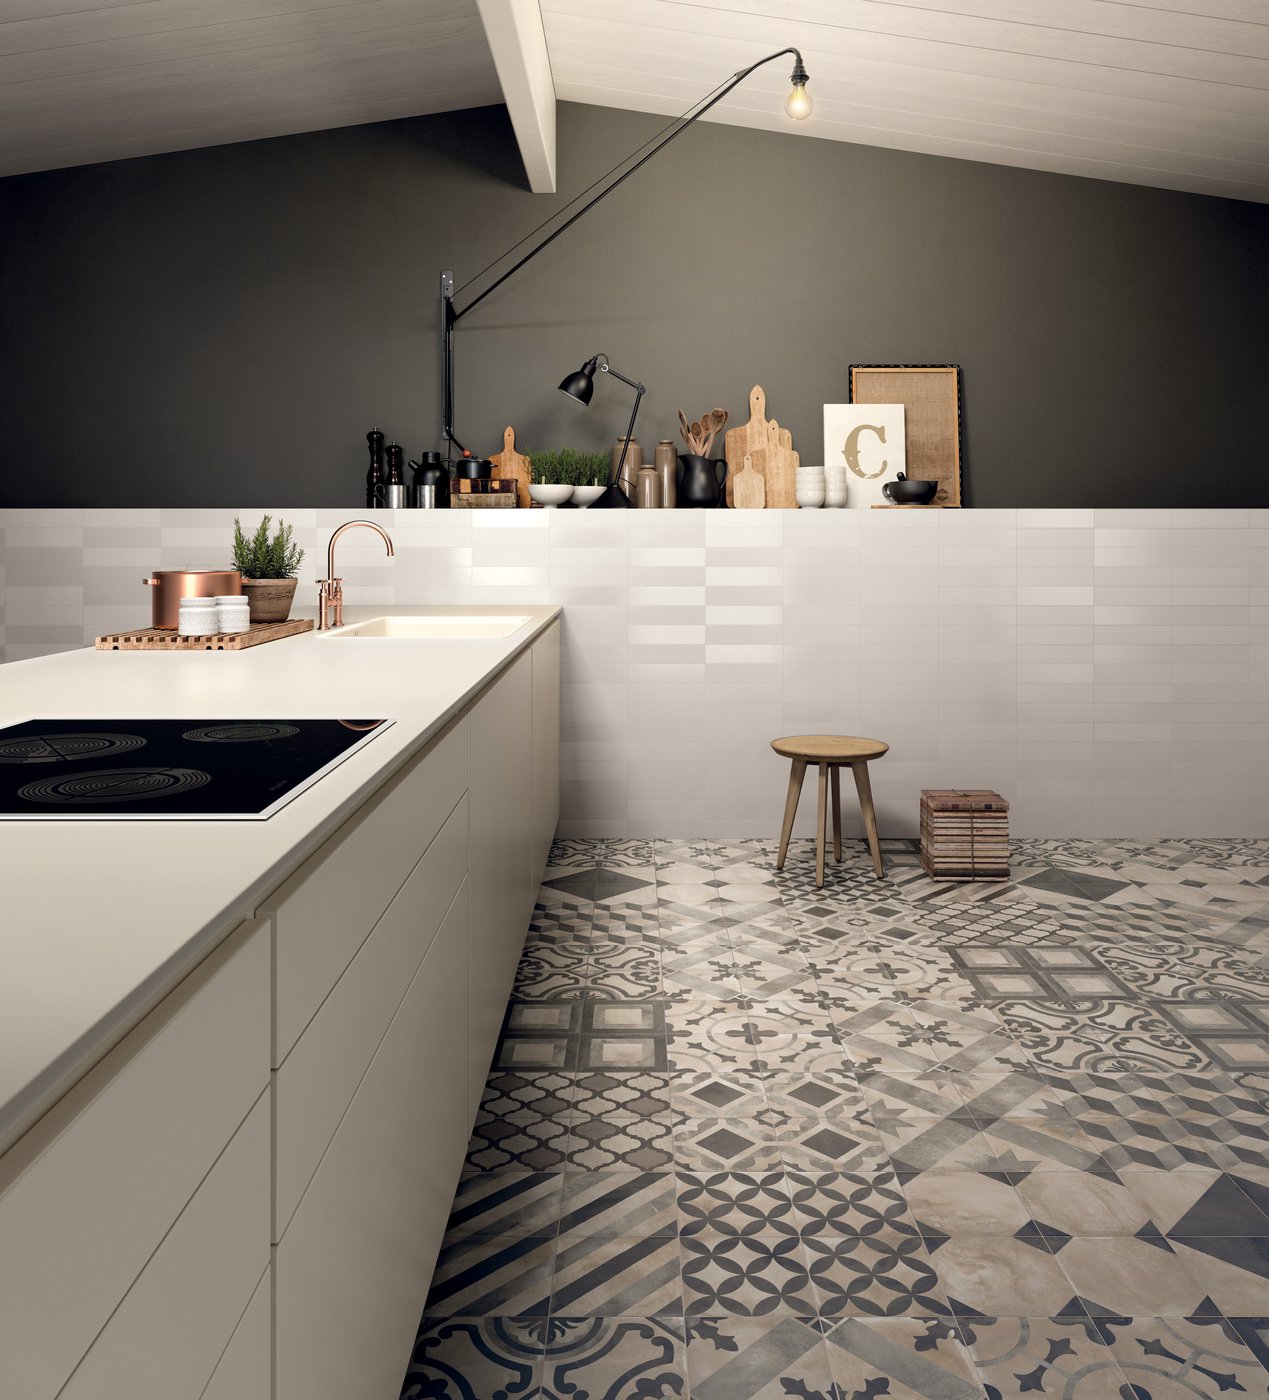 Hexagon Terracotta Tile For Floors And Walls Terra Marca Corona